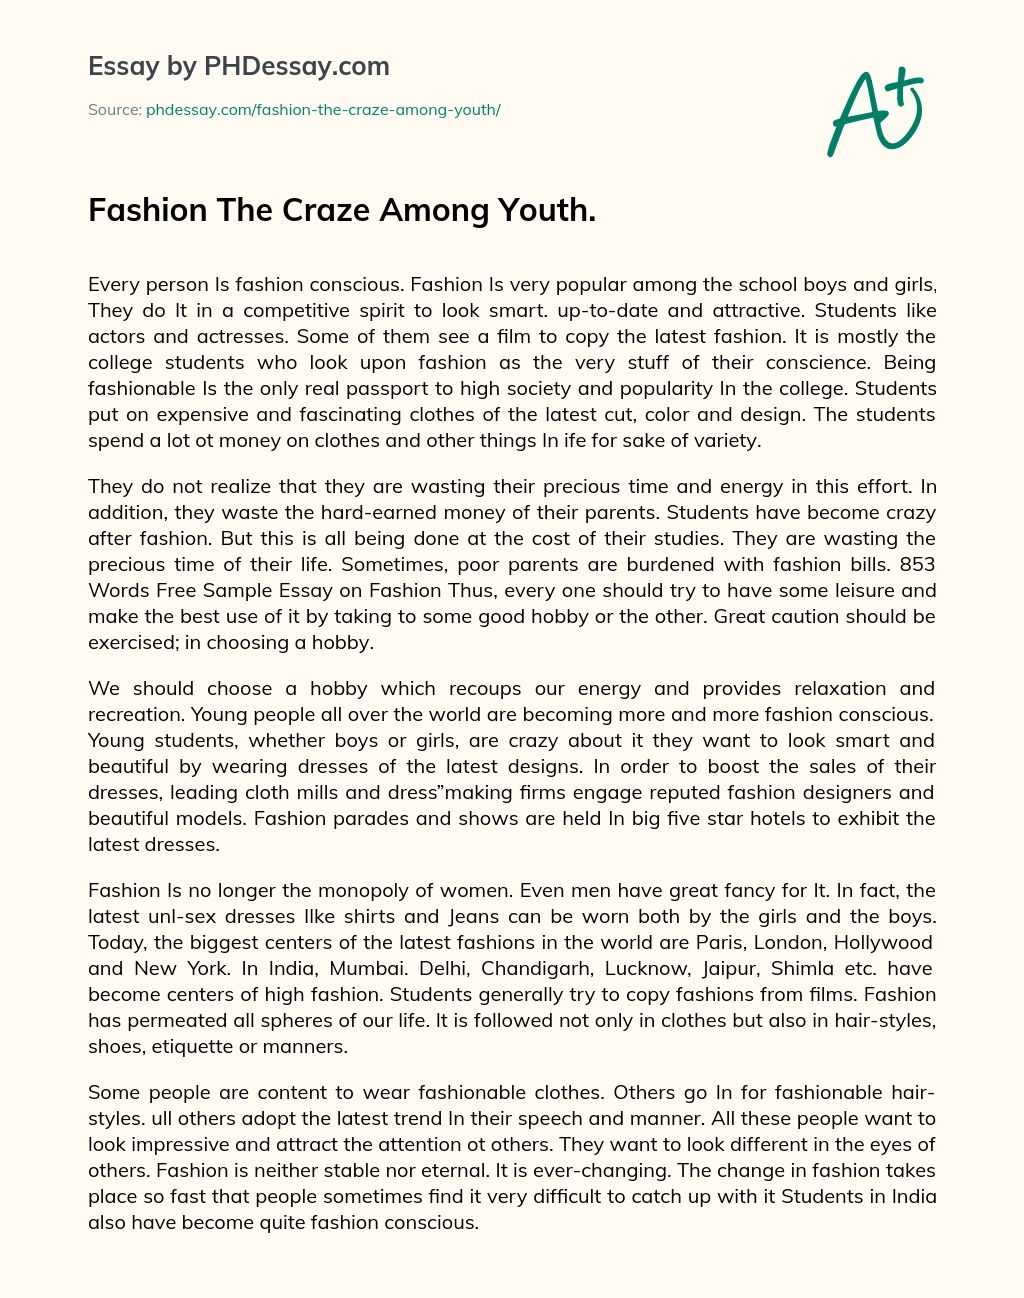 Fashion The Craze Among Youth. essay